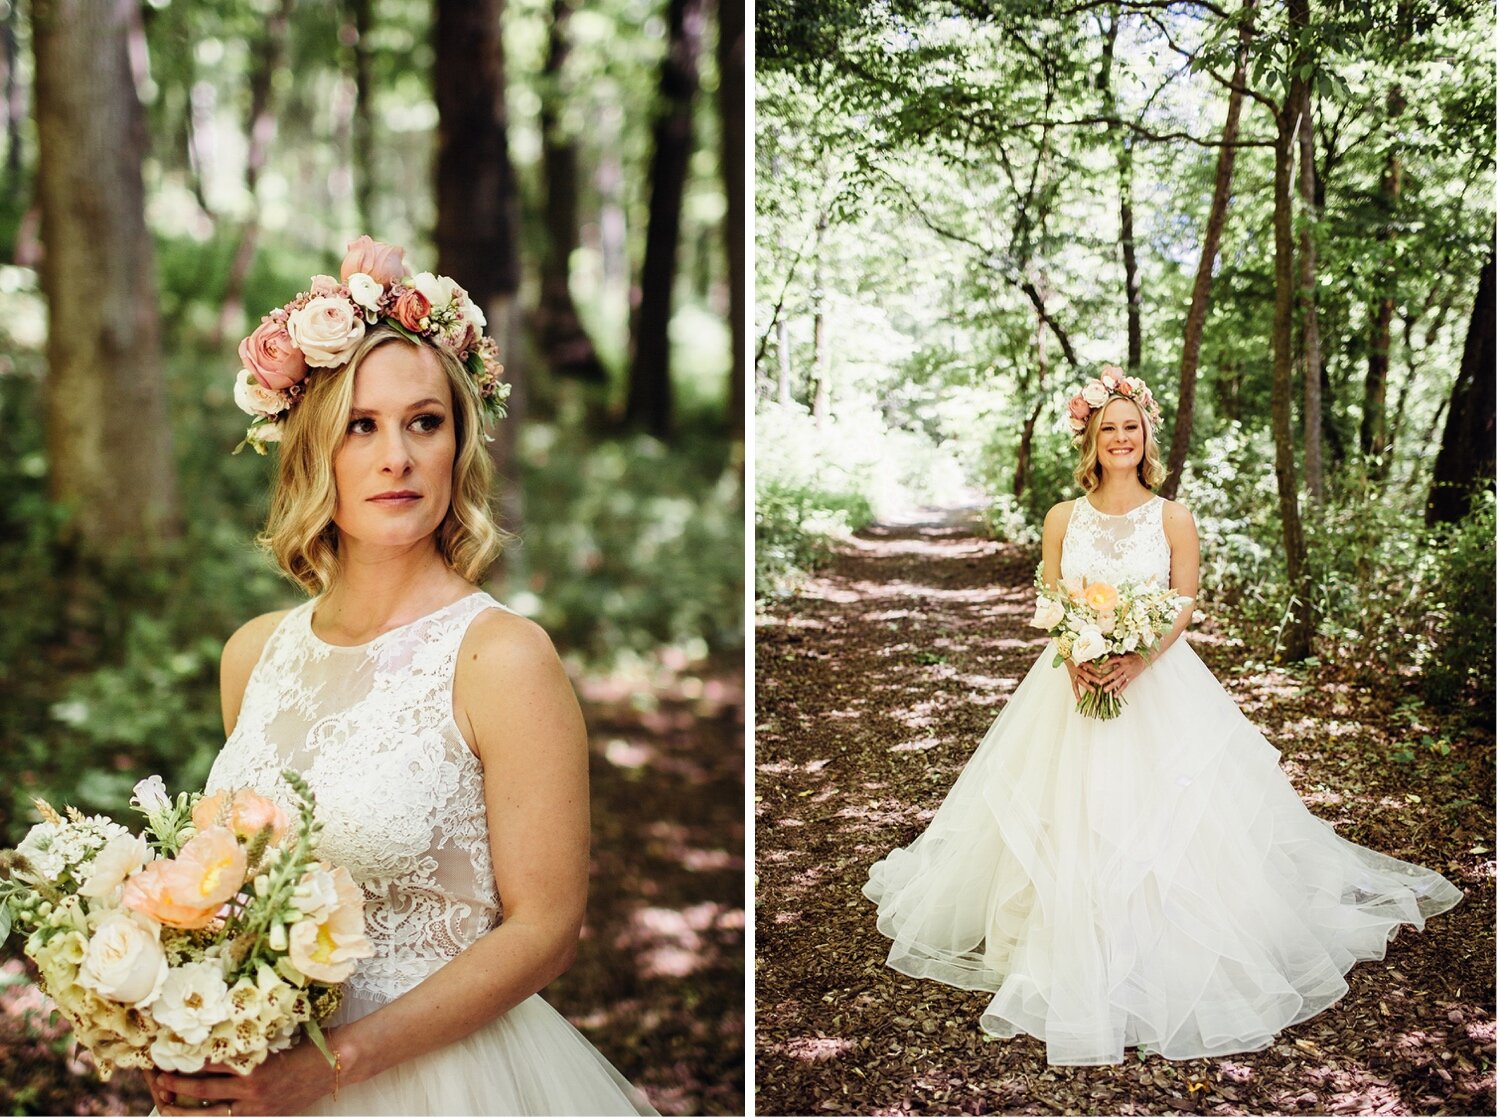 07_Tennessee-Farm-Outdoor-Summer-Wedding-Florist-249_Tennessee-Farm-Outdoor-Summer-Wedding-Florist-215.jpg